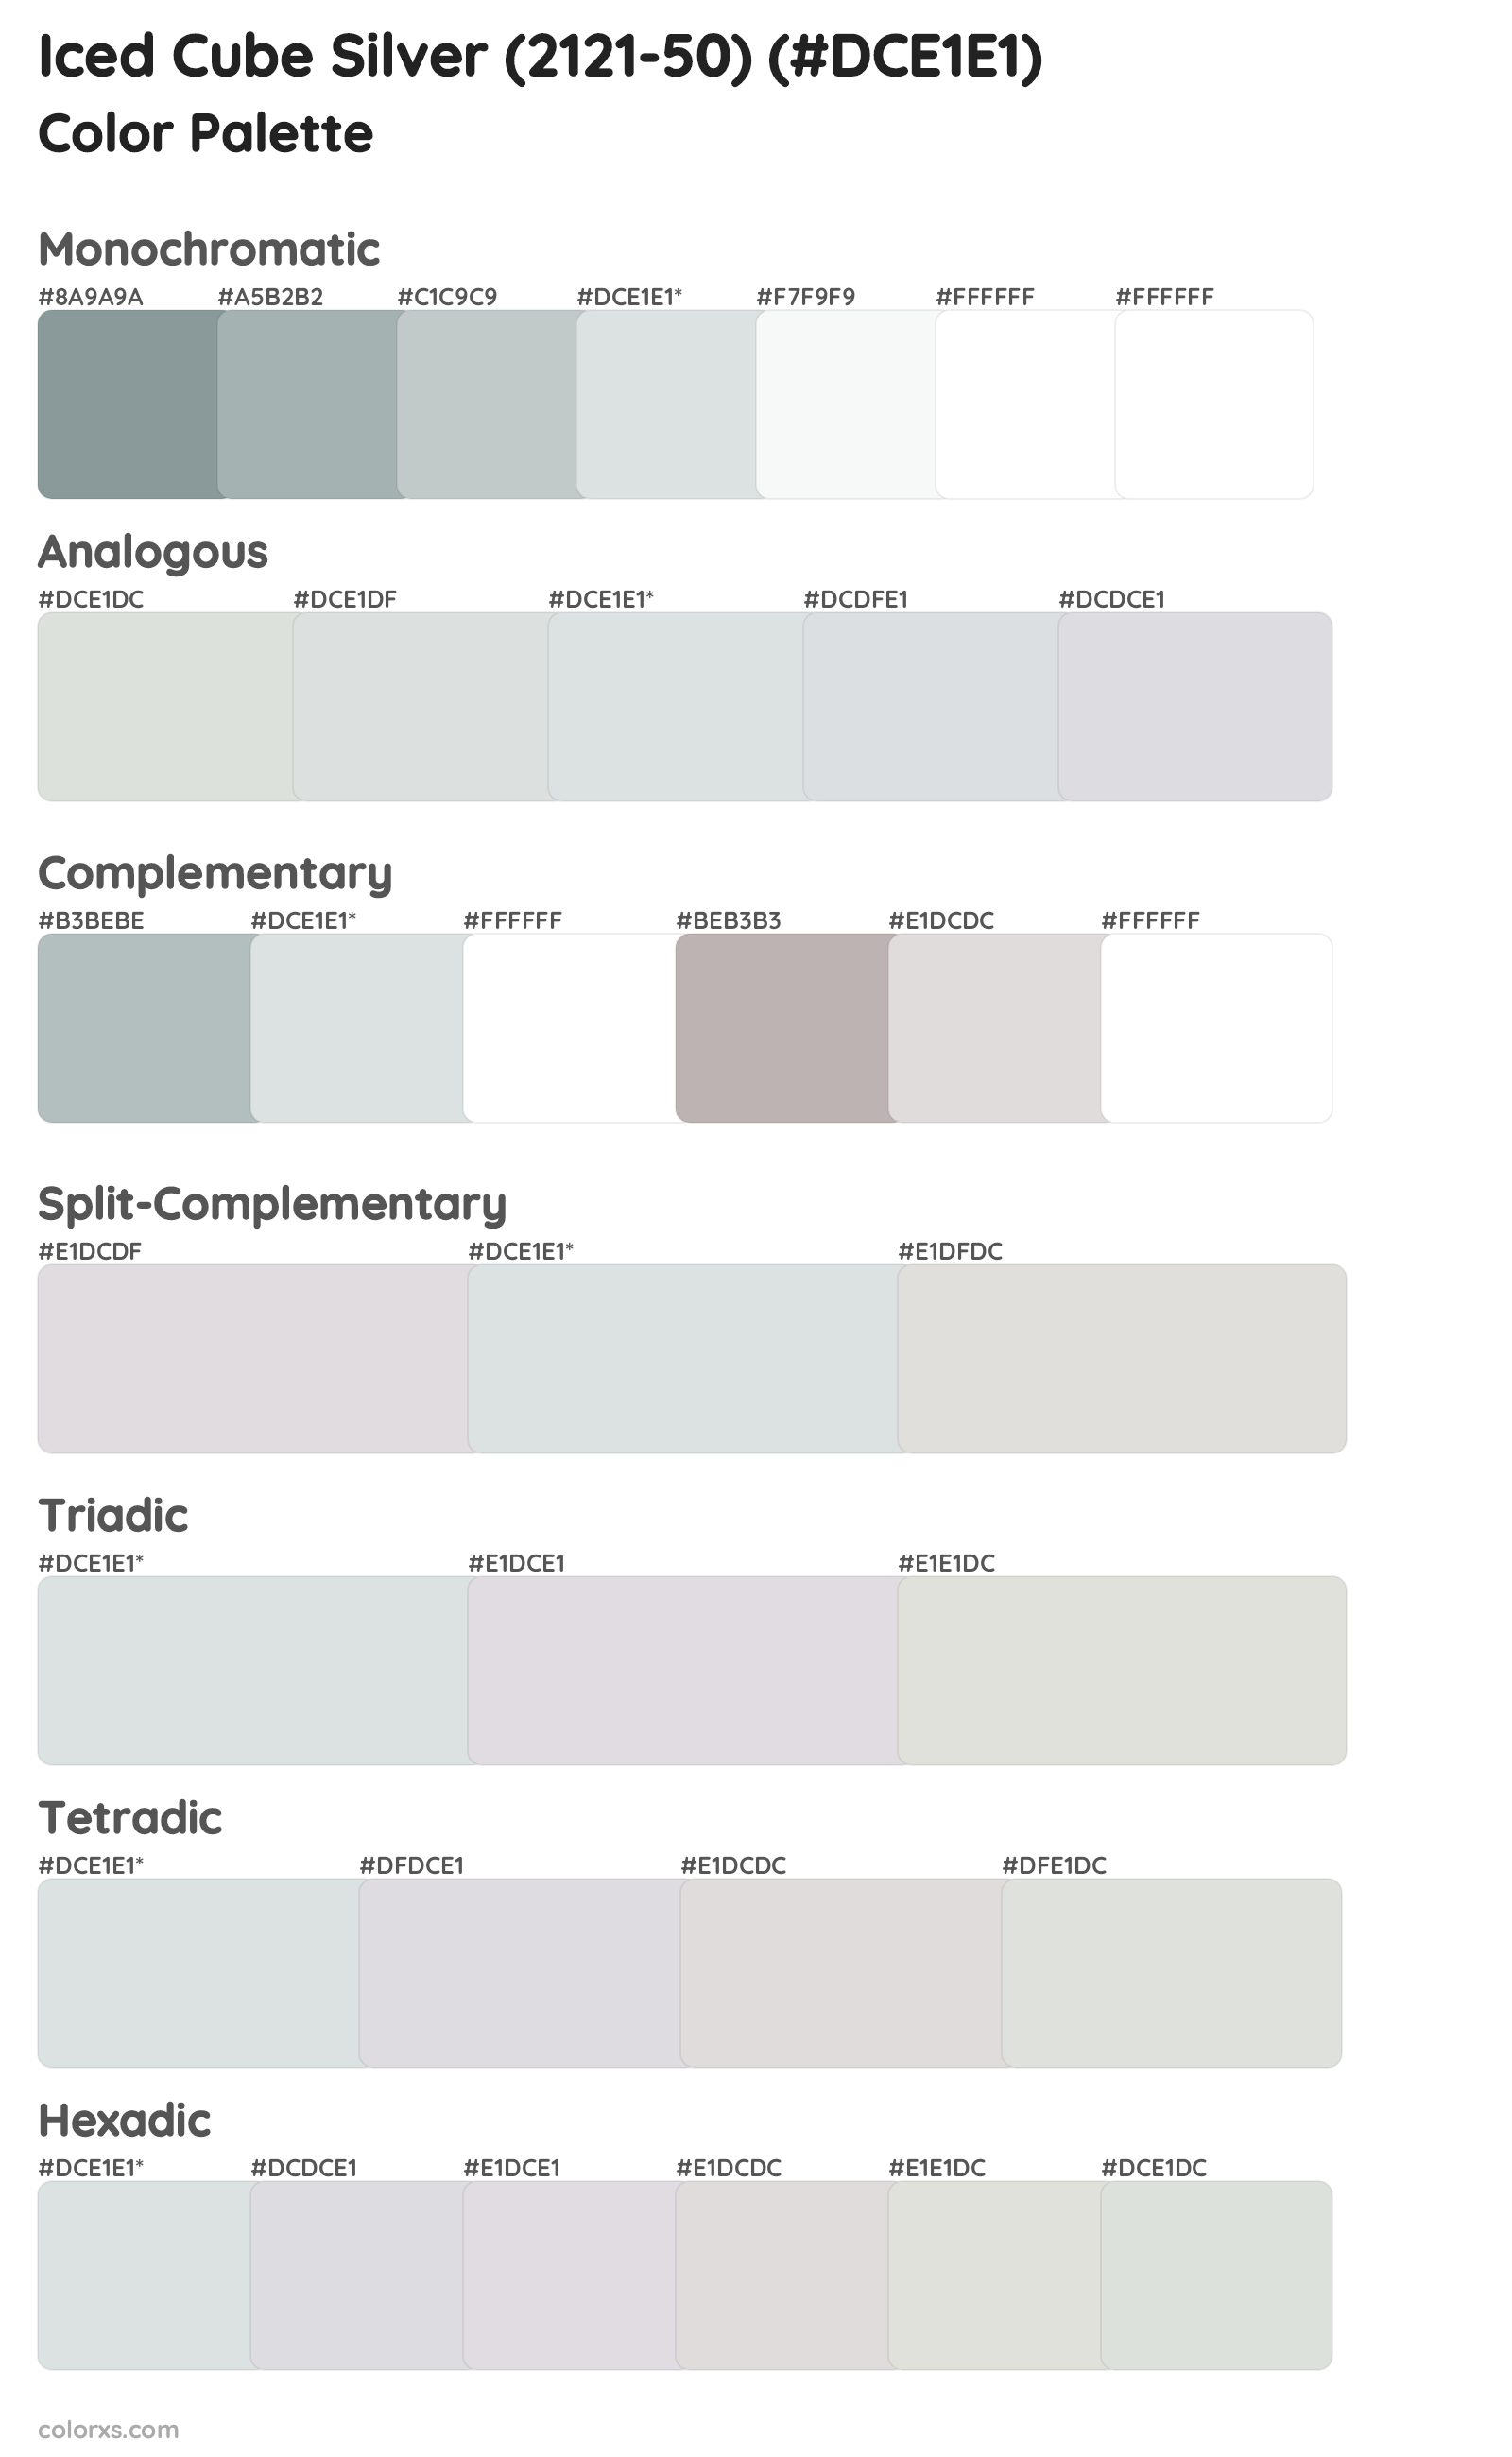 Iced Cube Silver (2121-50) Color Scheme Palettes